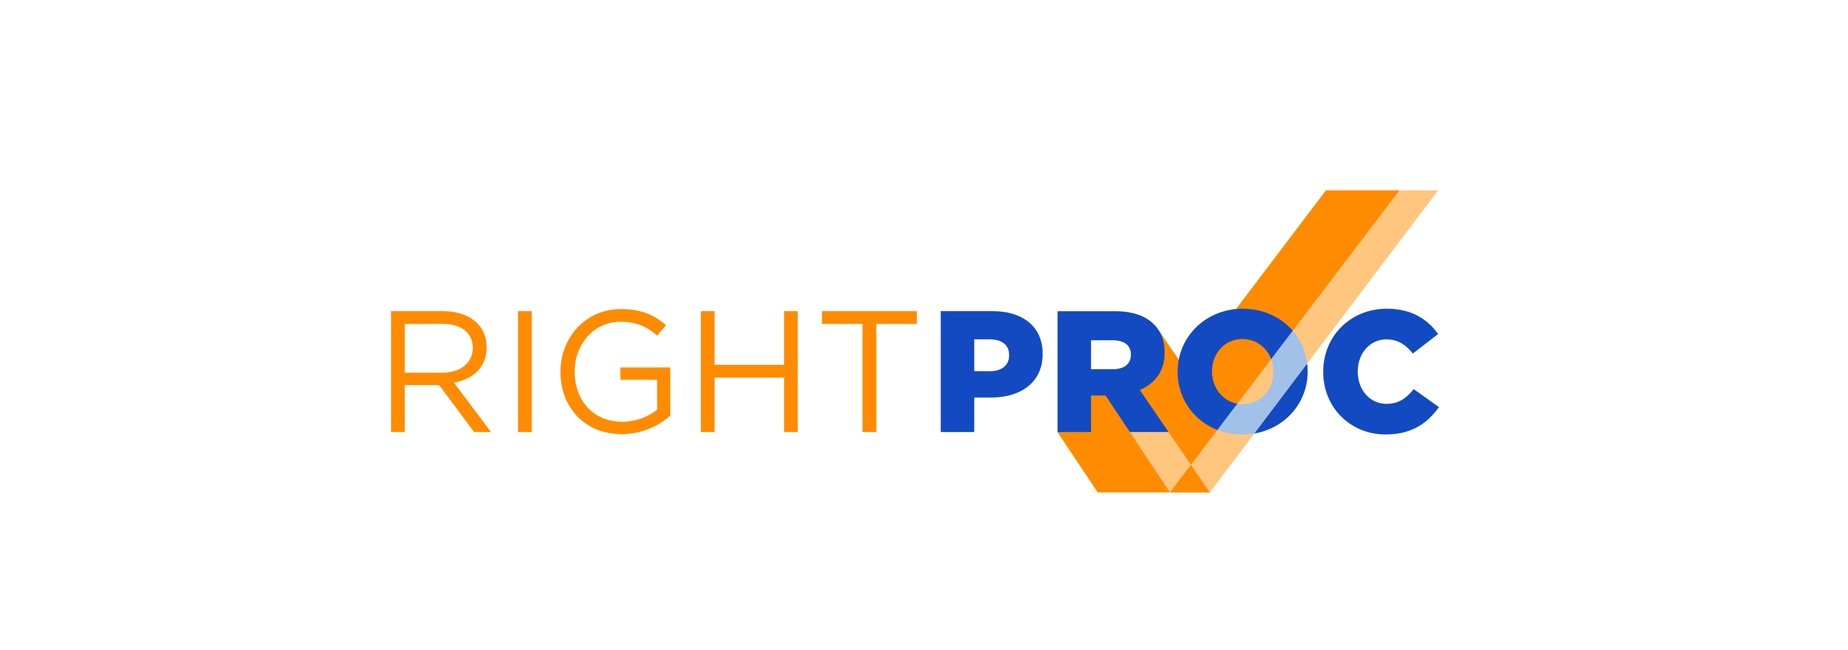 RightProc_Listing_Logo